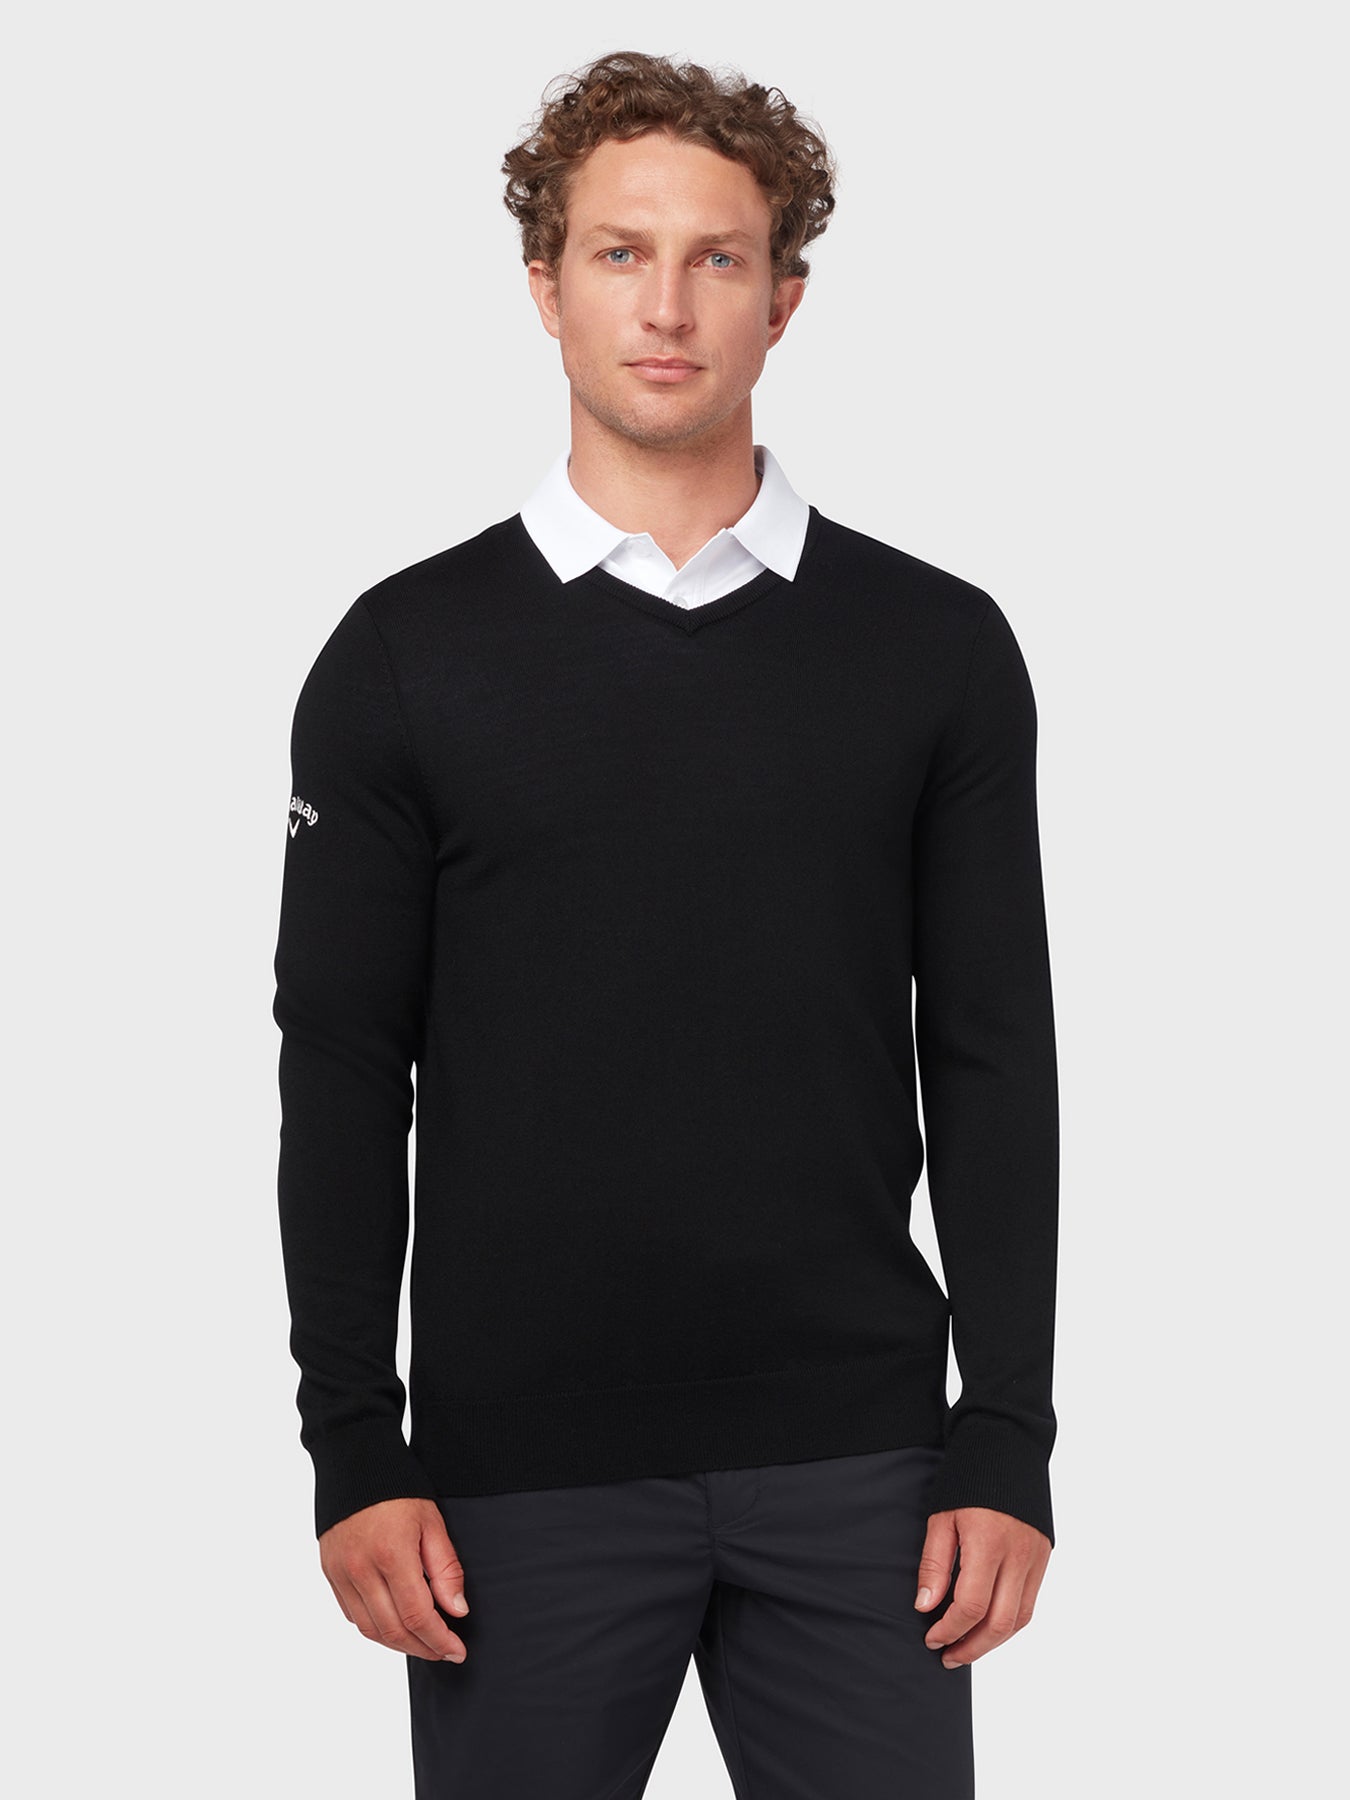 View Thermal Merino Wool VNeck Sweater In Black Onyx information